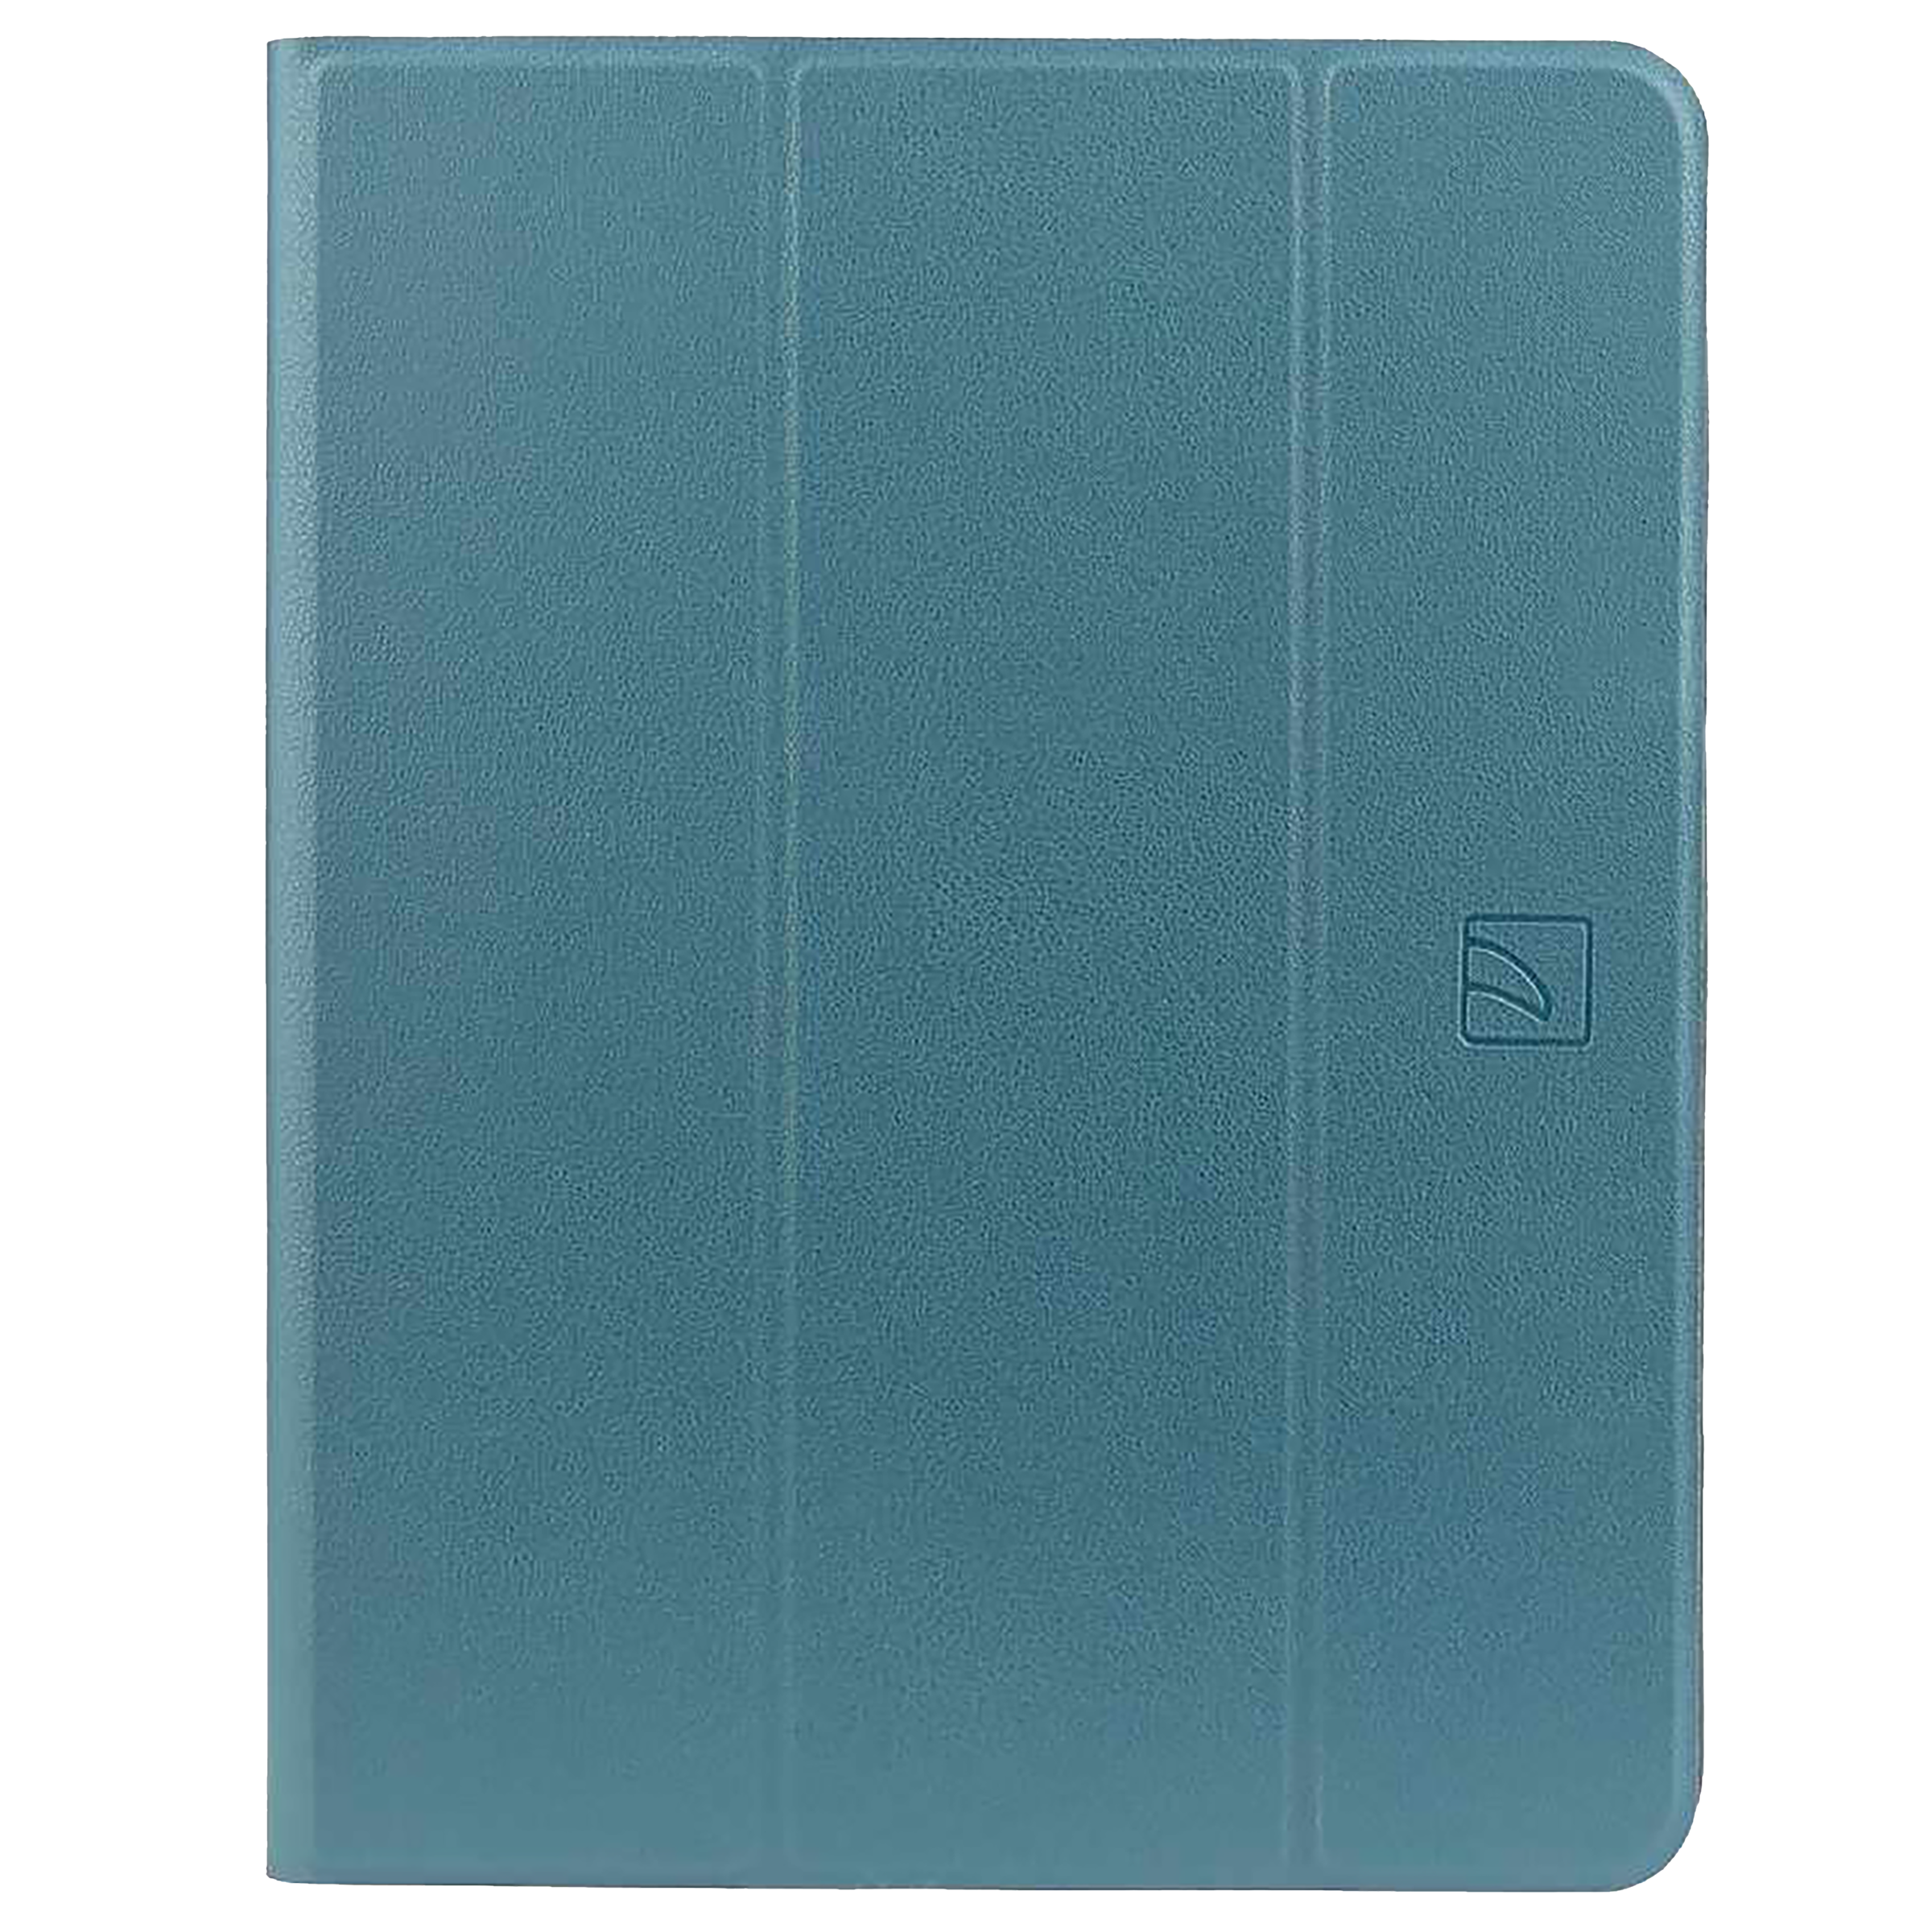 Tucano Premio Polyurethane Leather Folio Case for Apple iPad 10.2 Inch (7th, 8th, 9th Gen), iPad Air 10.5 Inch (Apple Pencil Internal Support, Blu Scuro)